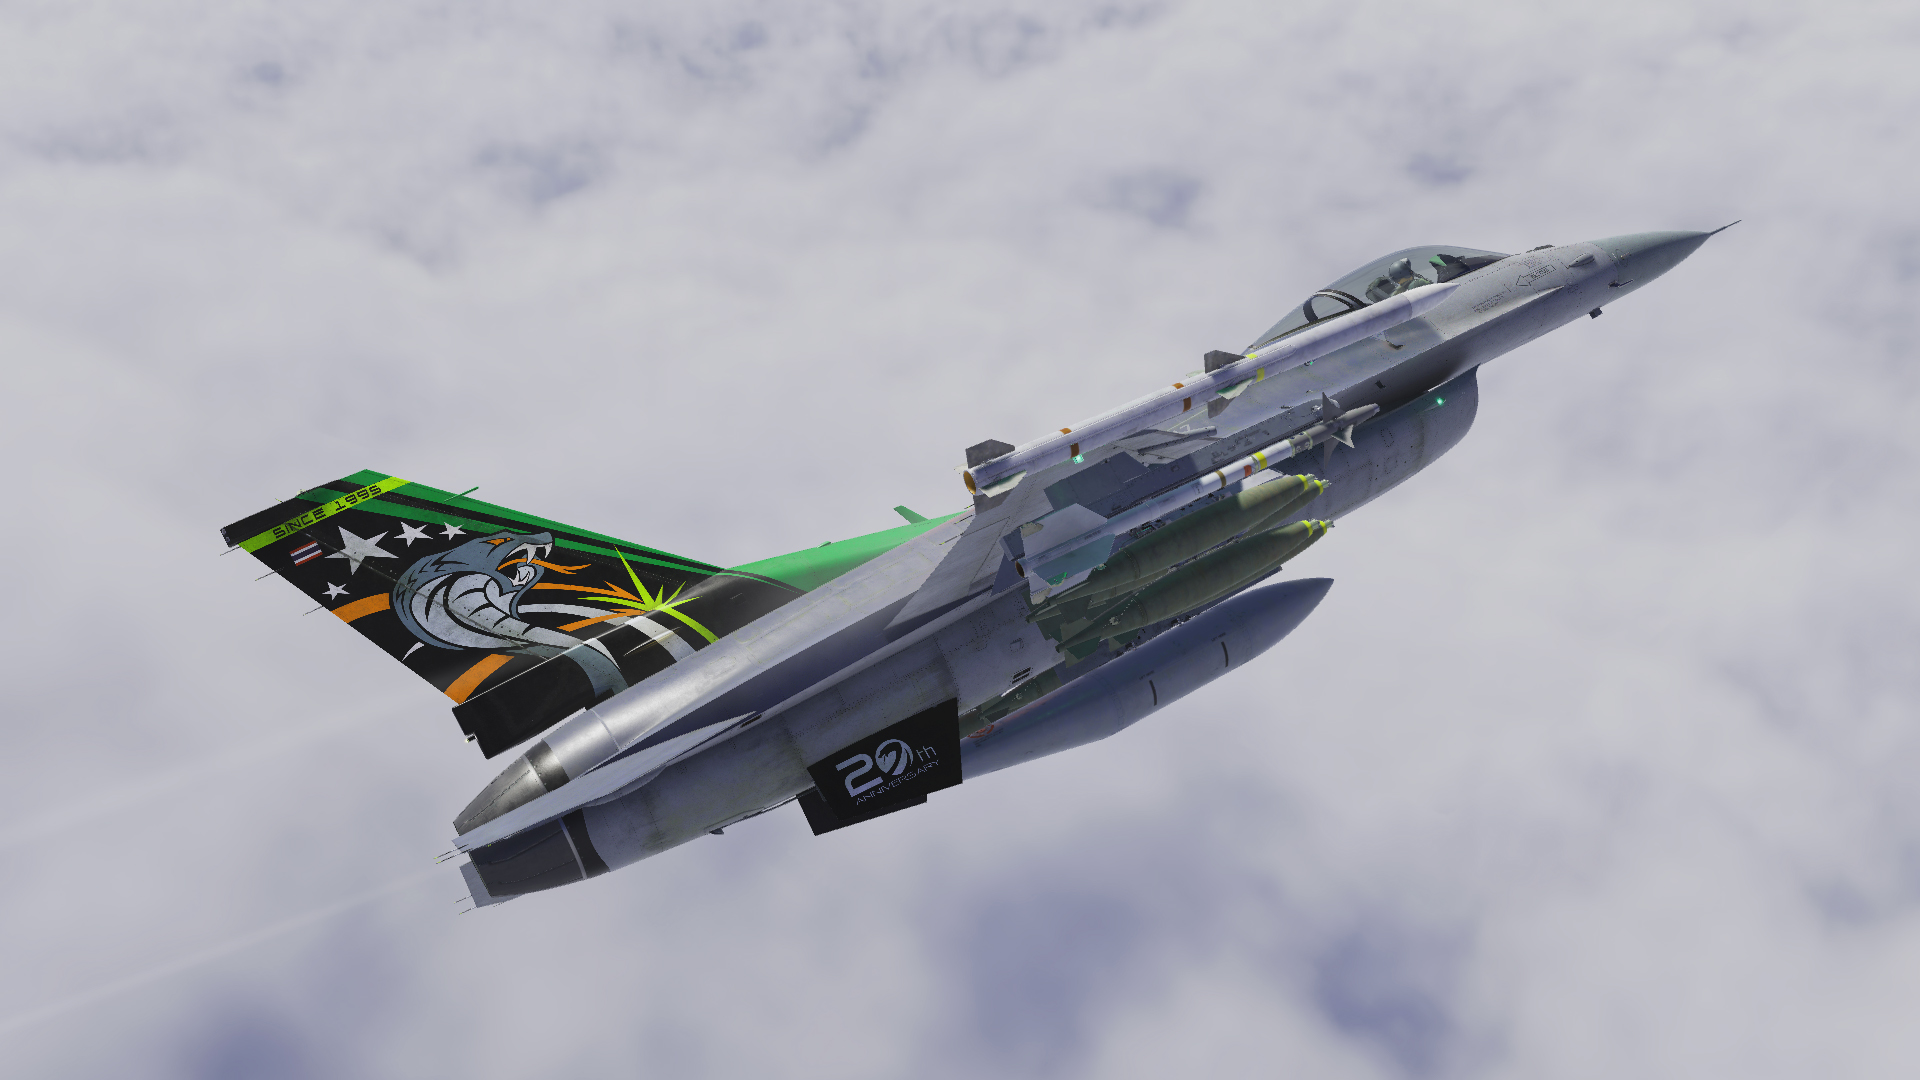 RTAF F-16 eMLU 403Sqn "40317" (20Th Anniversary)